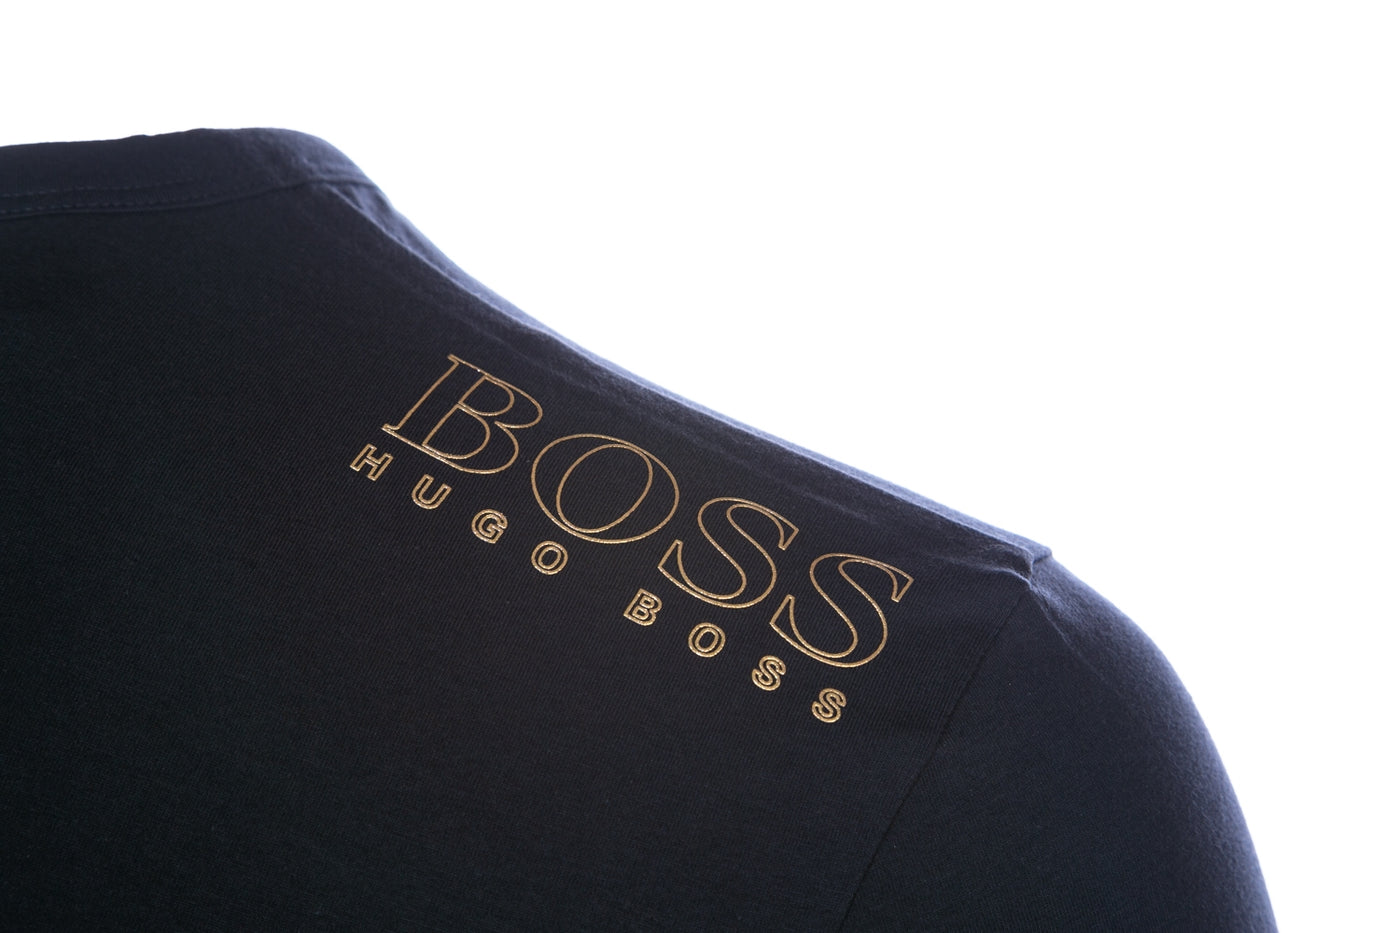 BOSS Togn Long Sleeve T Shirt in Navy & Gold